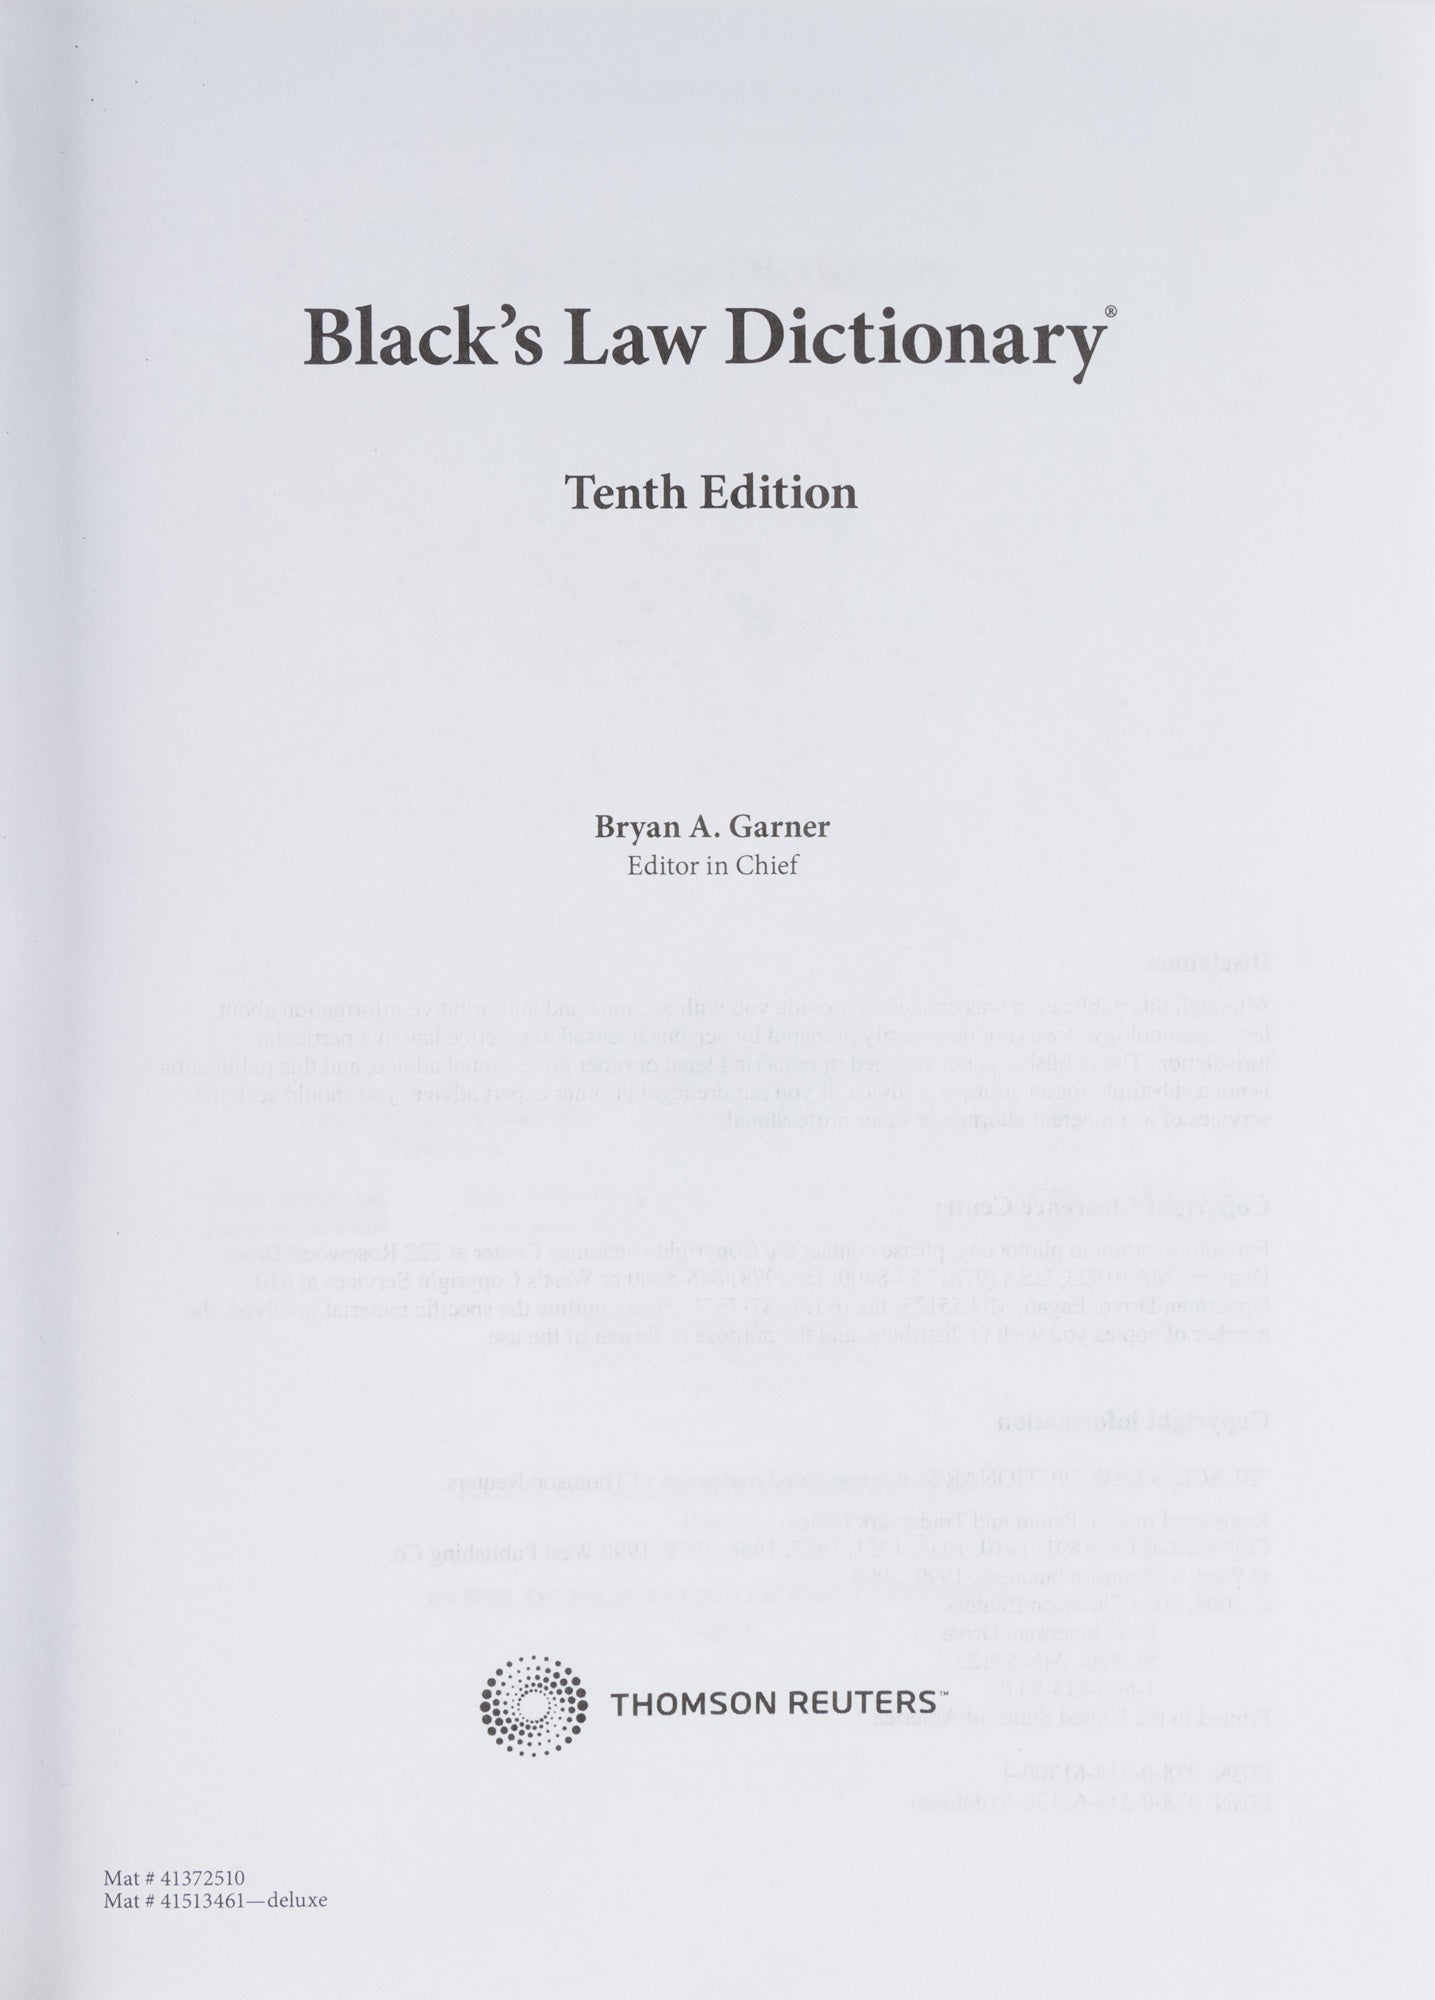 Black's Law 10th Tenth Edition. Inscribed by Garner | Bryan A. Garner, in